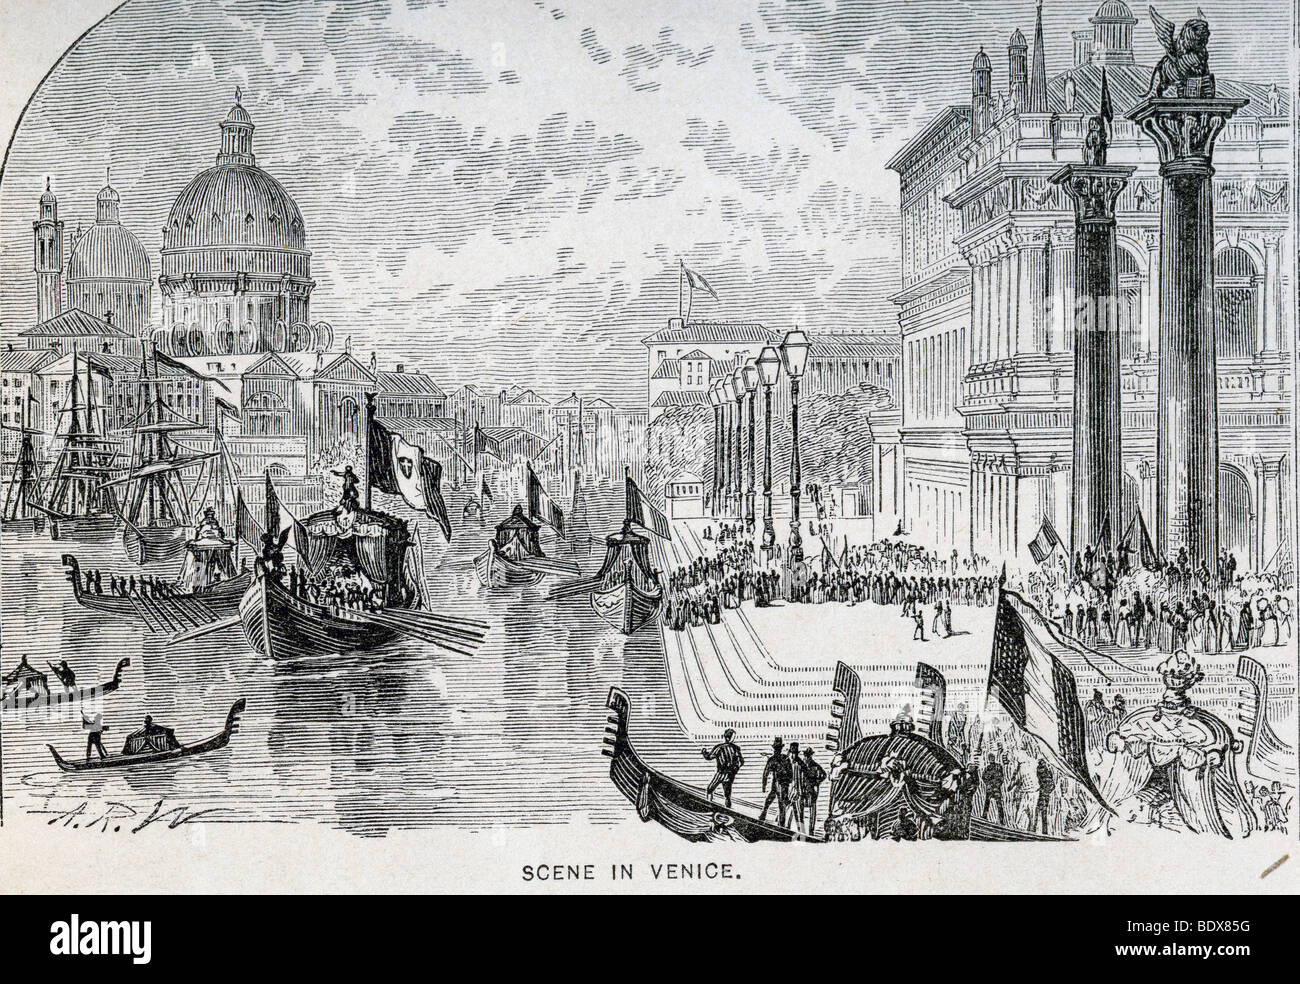 100 Jahre alte Lithographie - Szene in Venedig Stockfoto